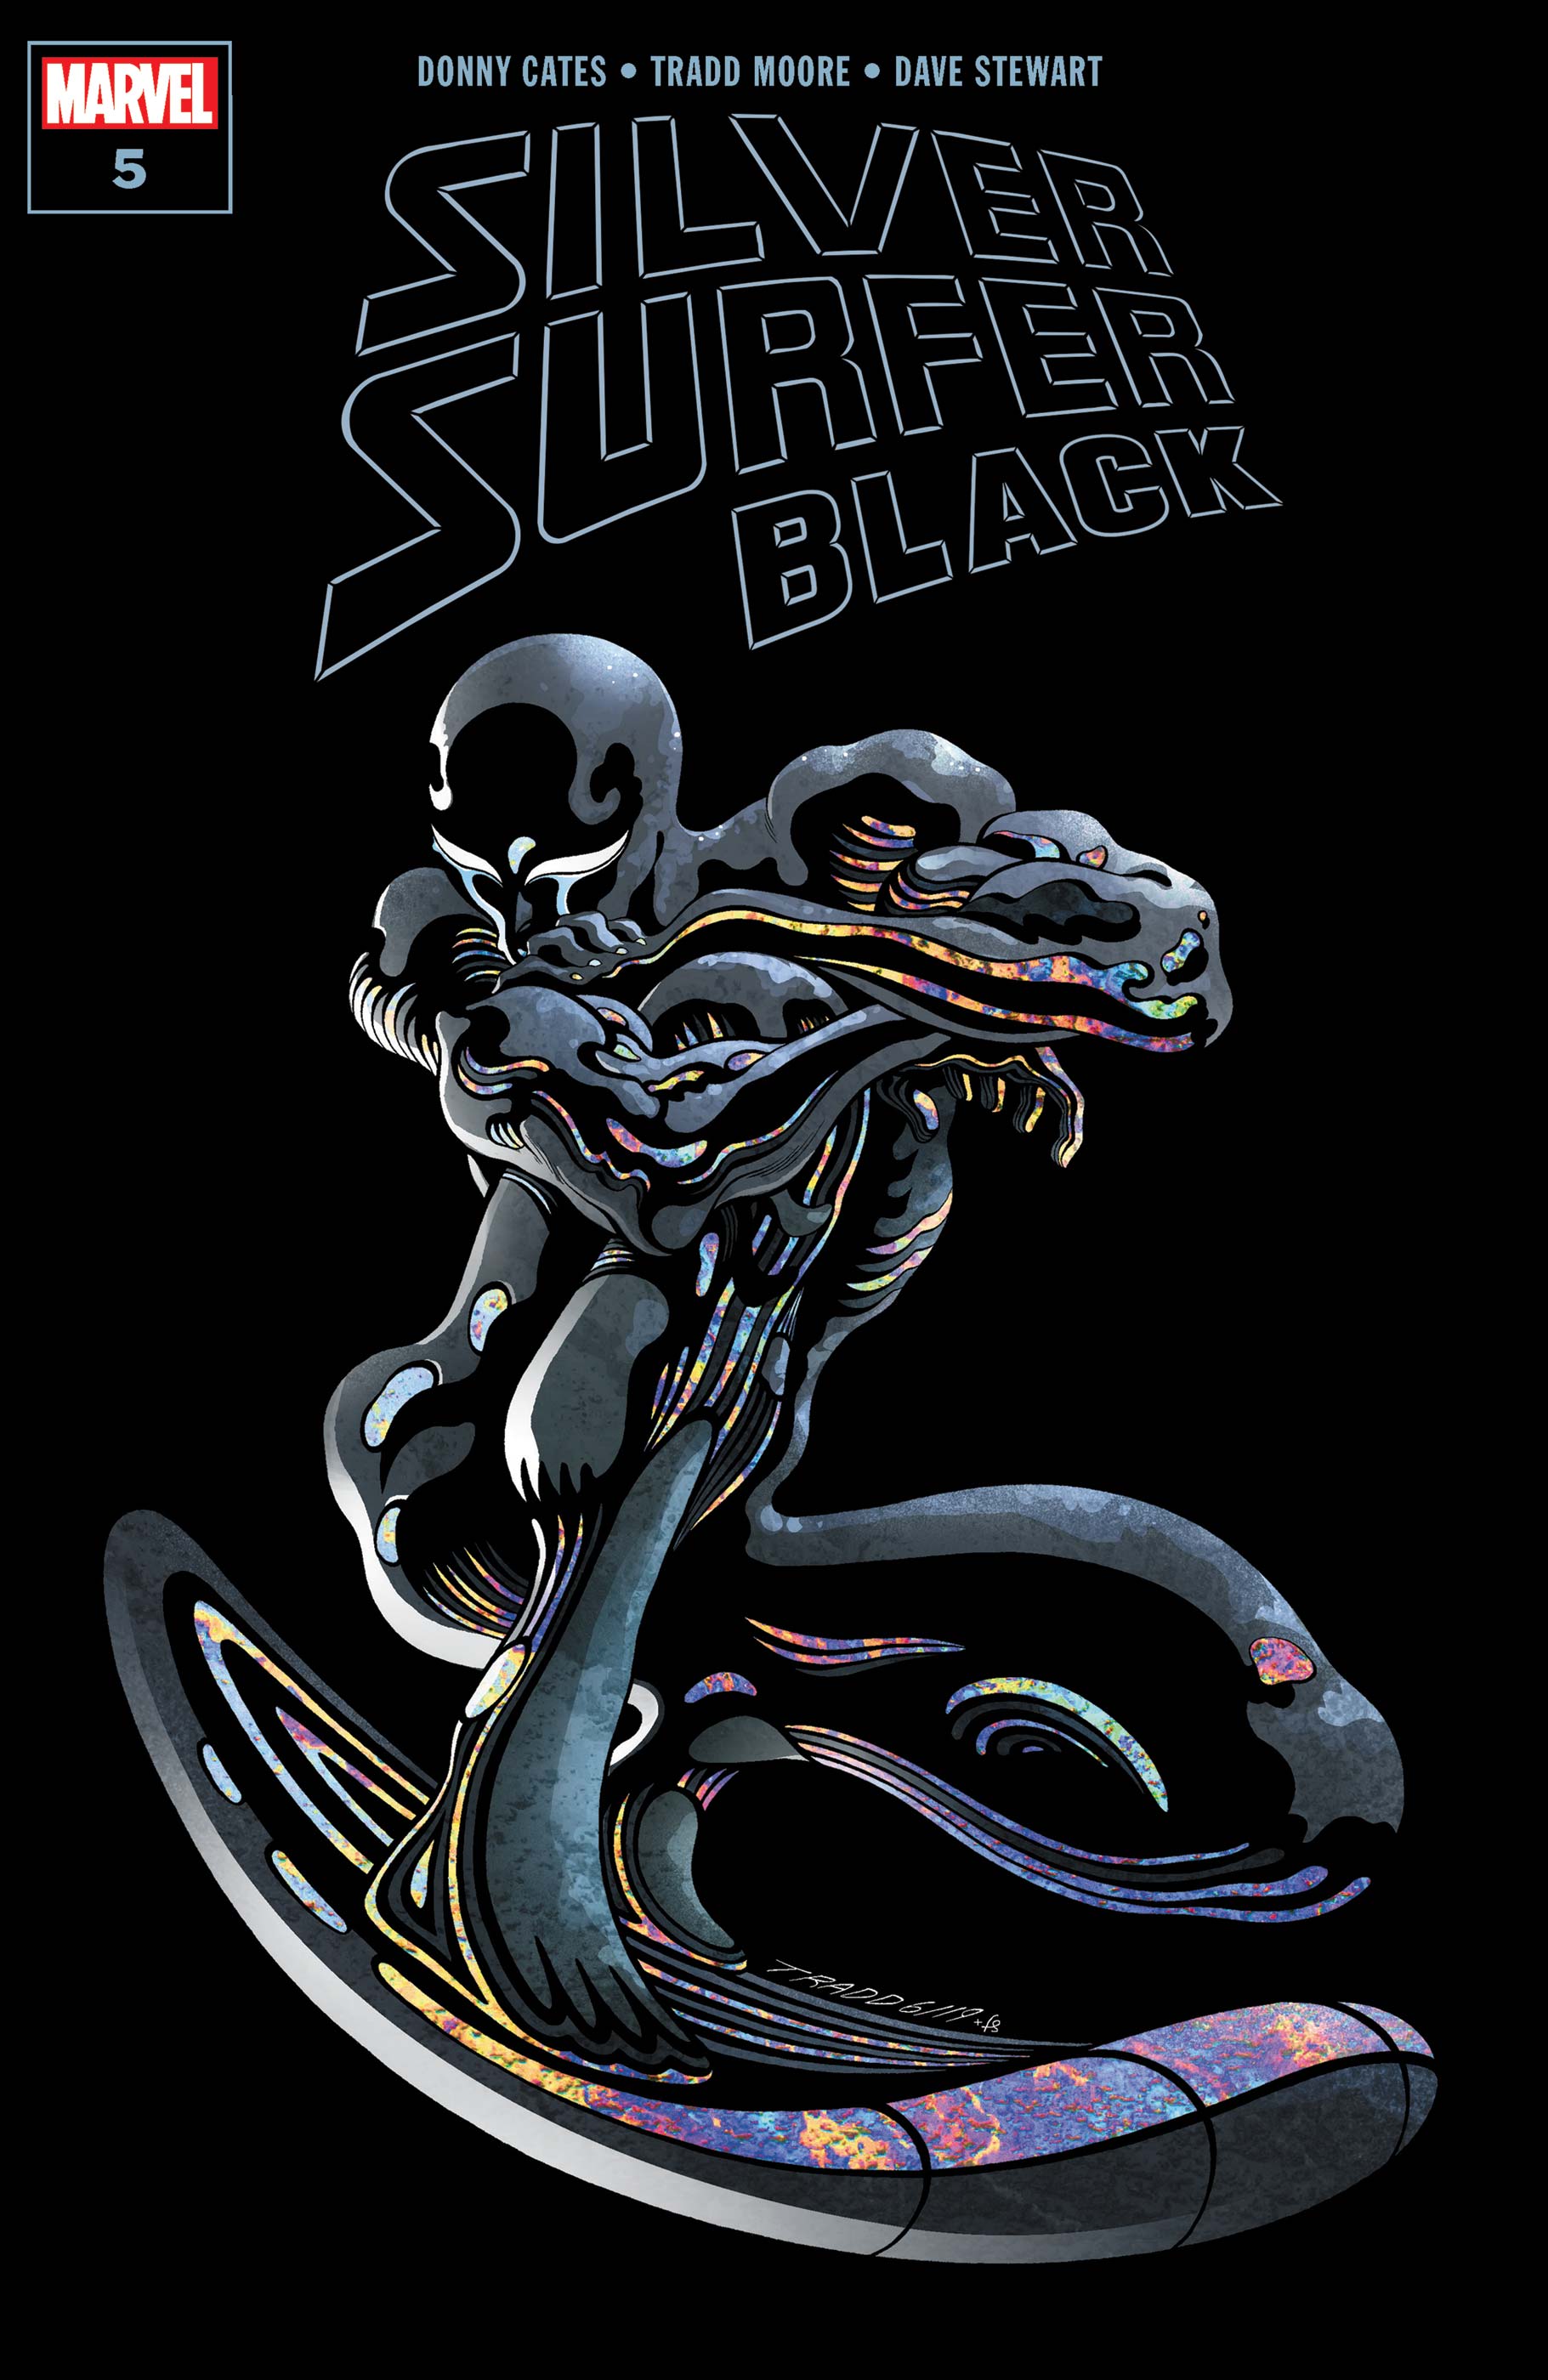 14/08/2019 OF 5 SILVER SURFER BLACK #3 